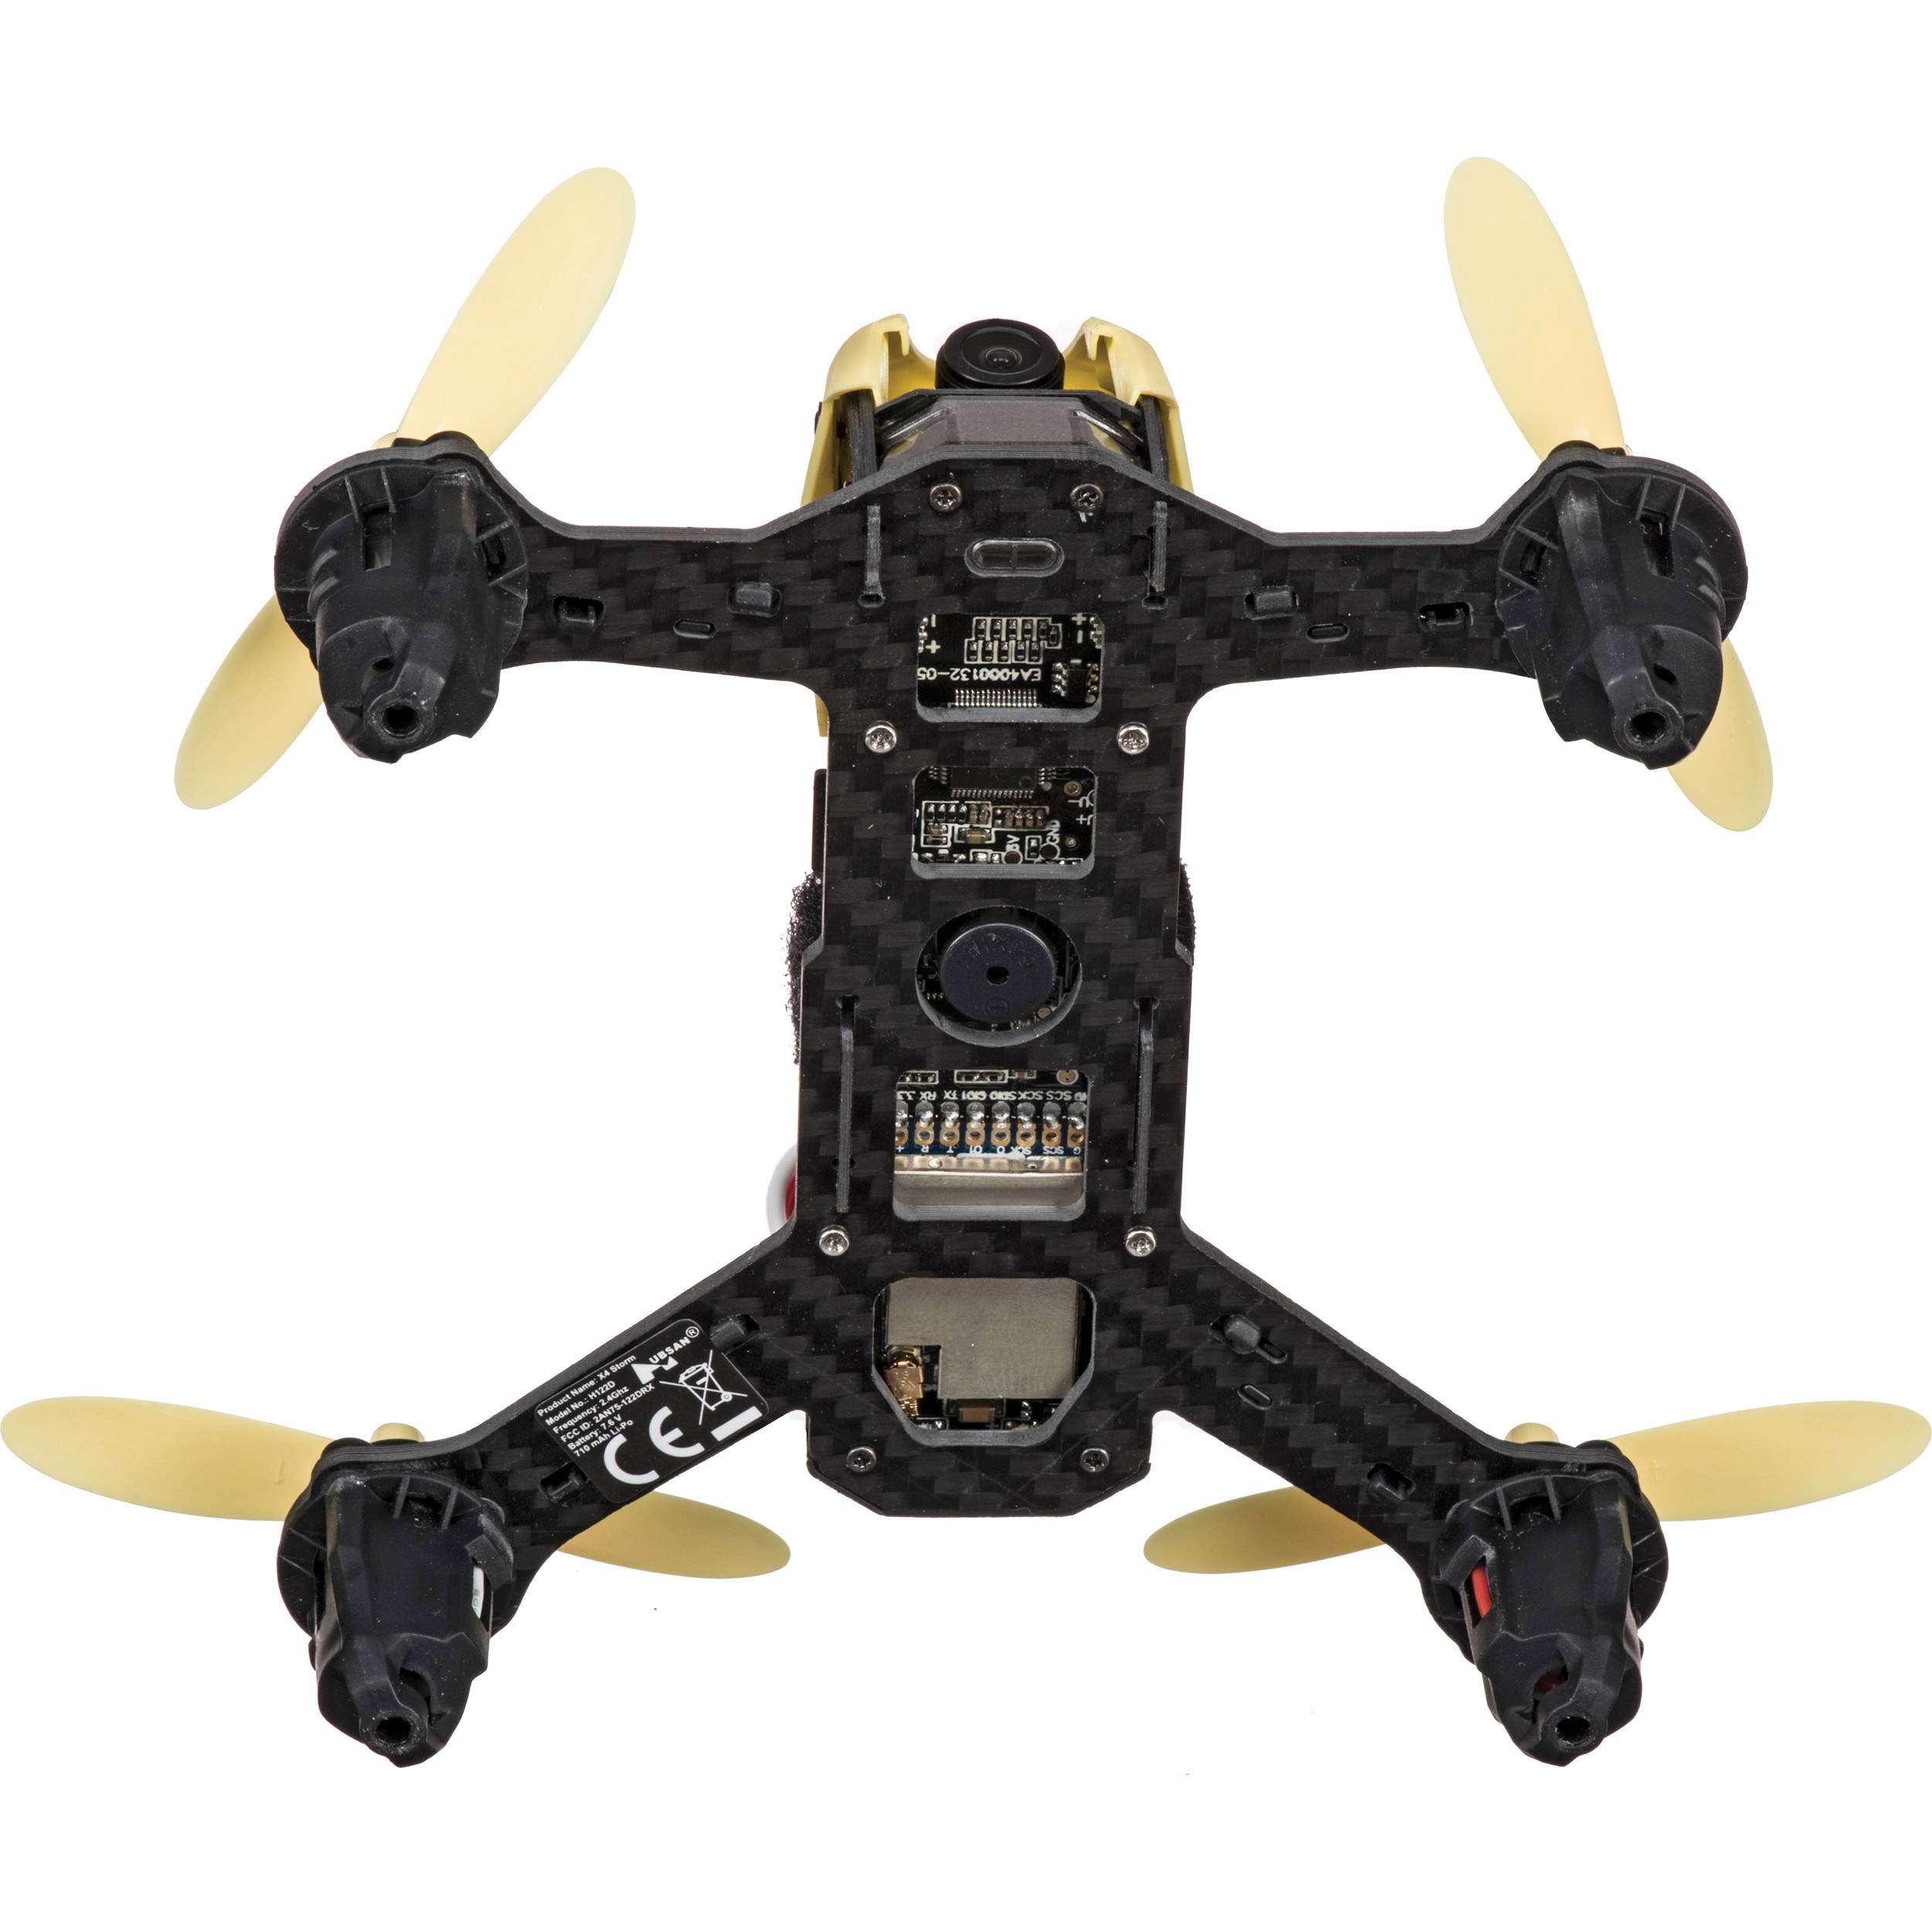 hubsan h122d x4 storm racing drone